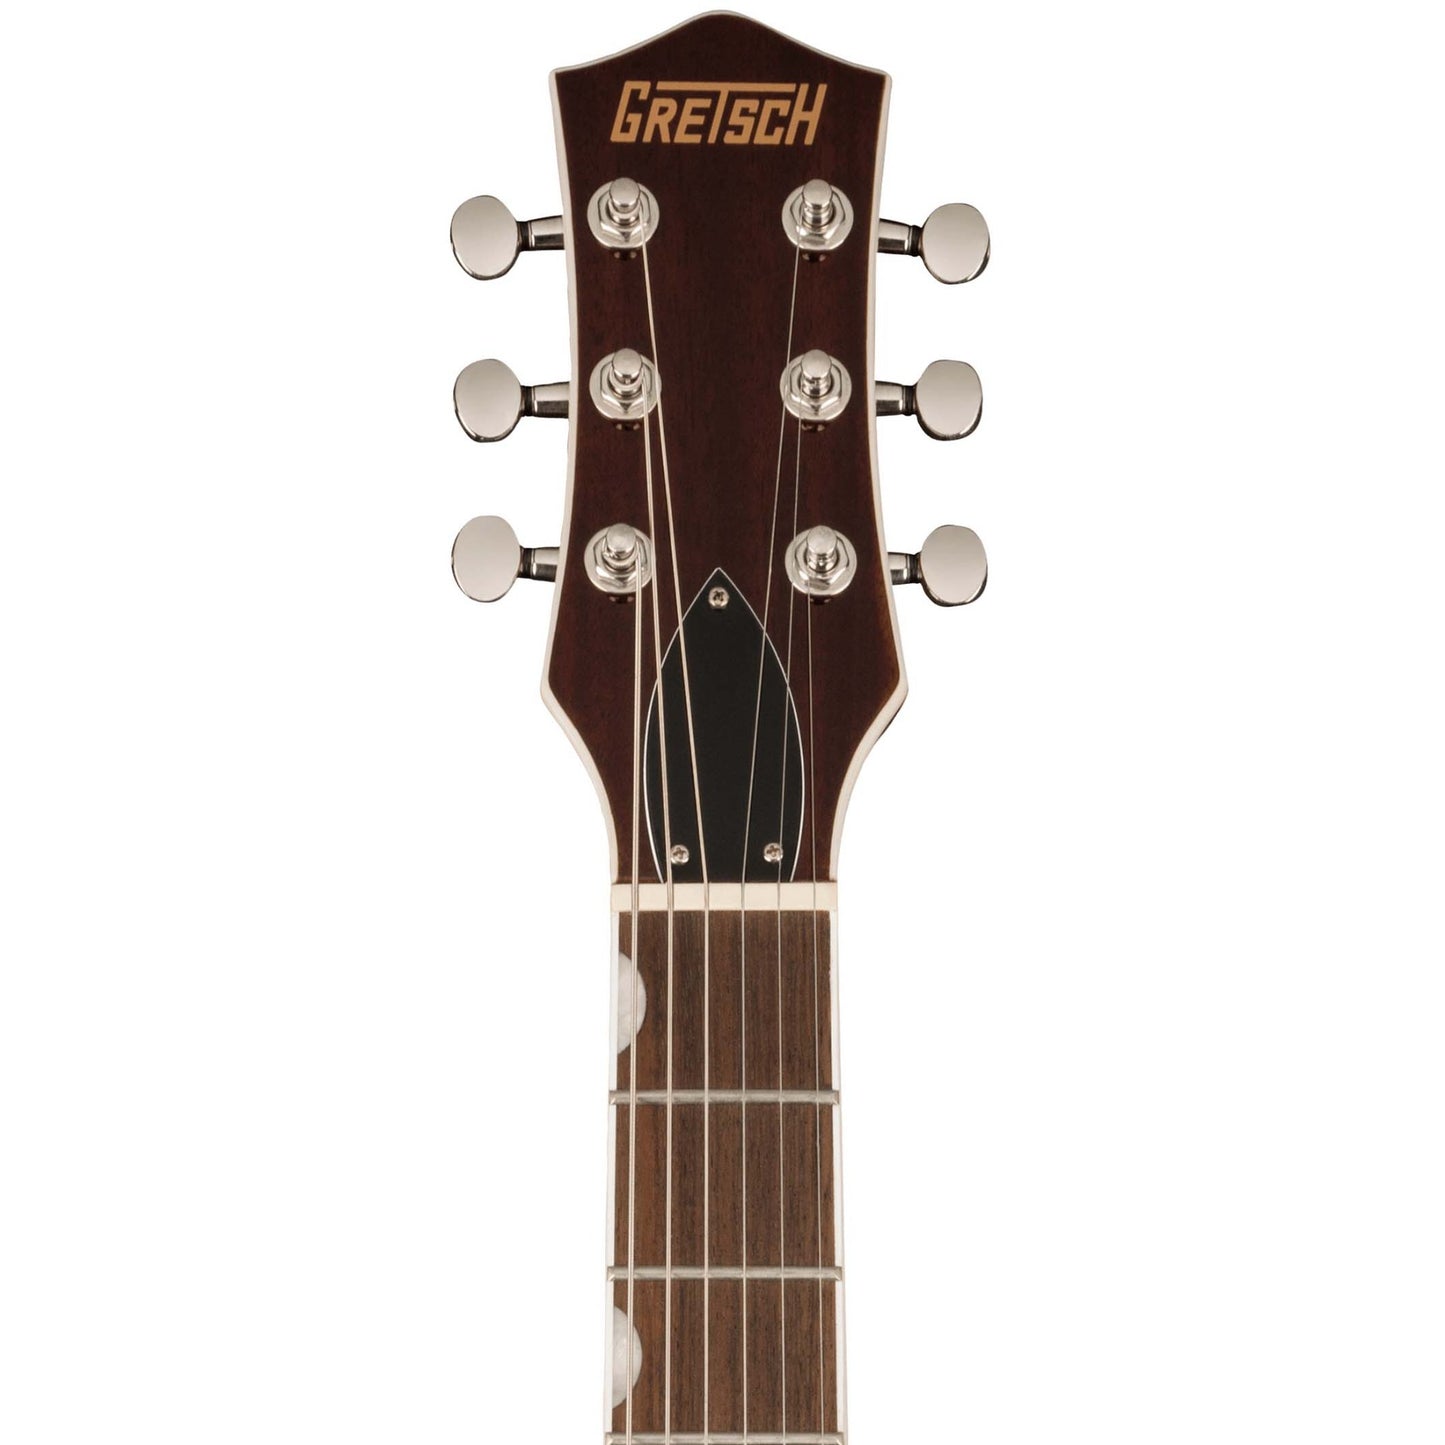 Gretsch G5210T-P90 Electromatic Jet Electric Guitar in Petrol